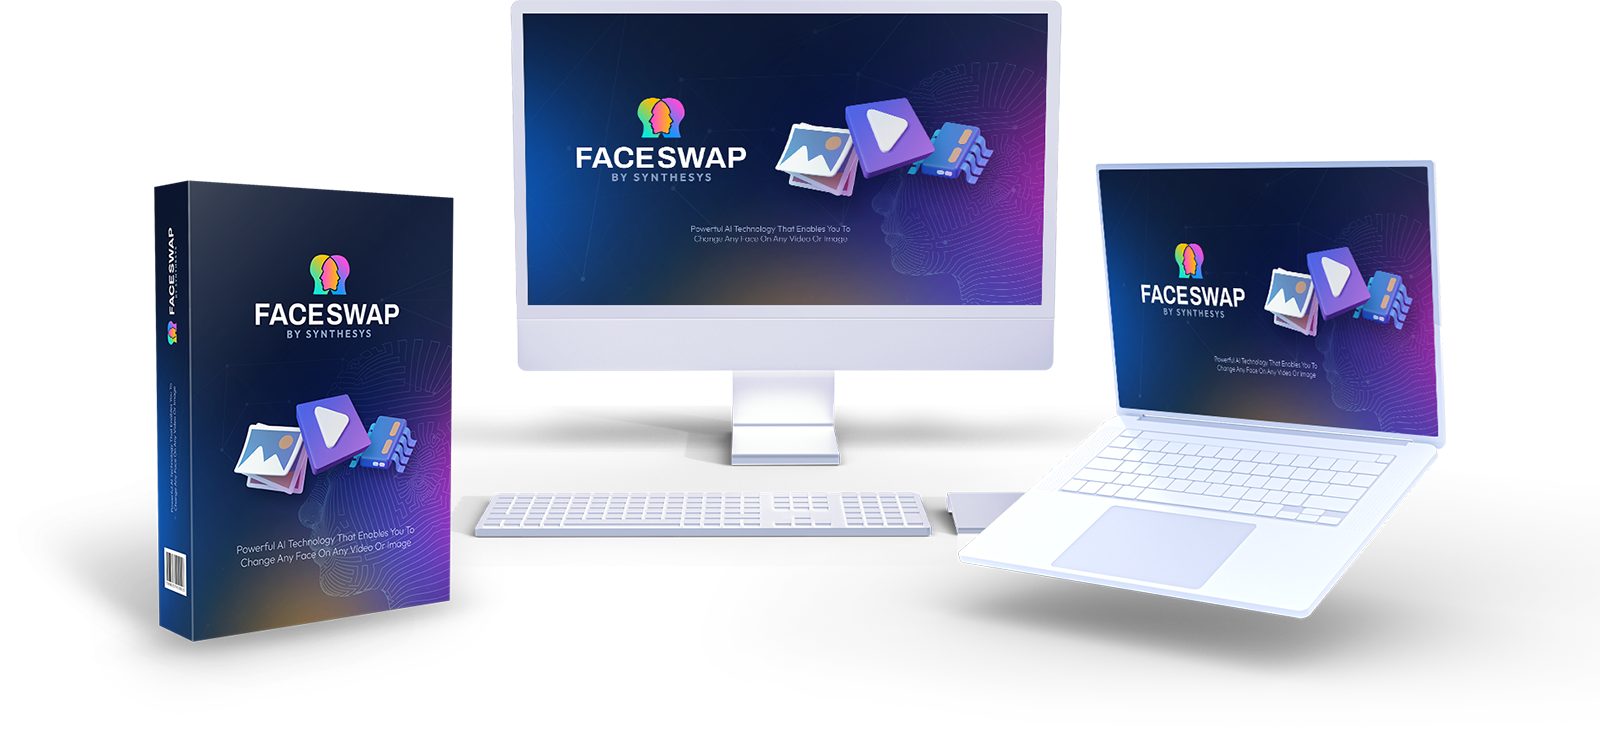 FaceSwap Review